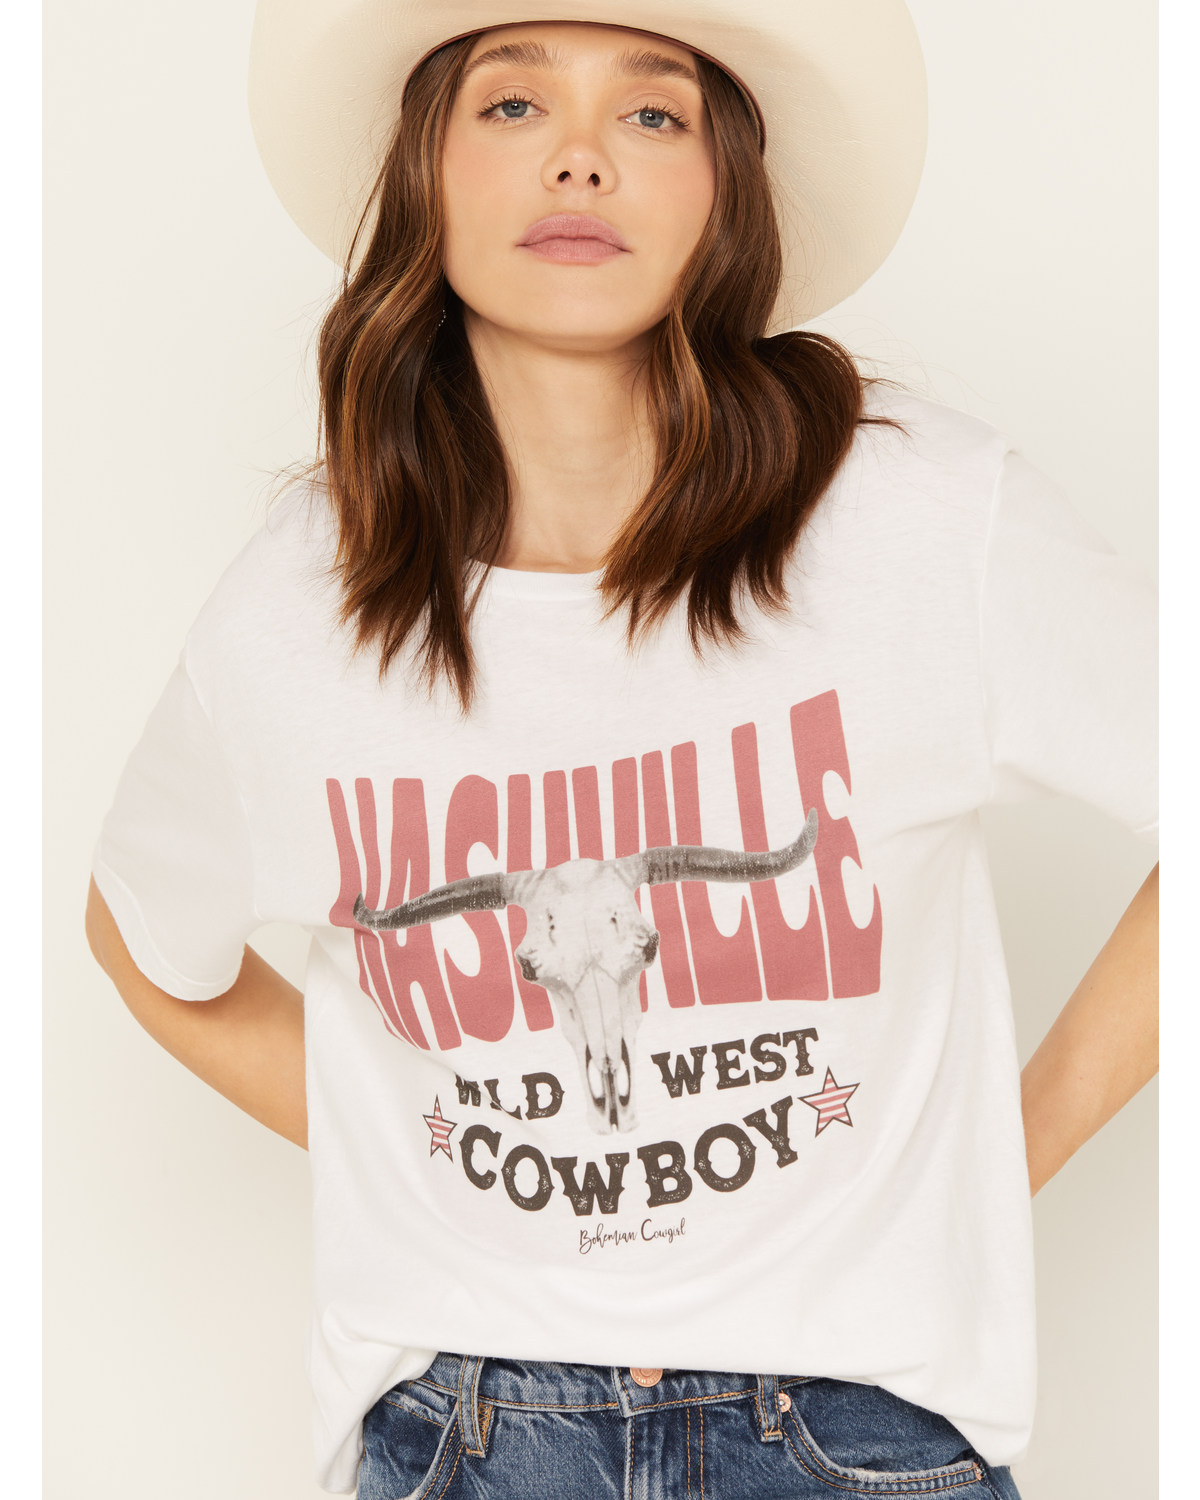 Bohemian Cowgirl Women's Nashville Wild West Cowboy Graphic Tee